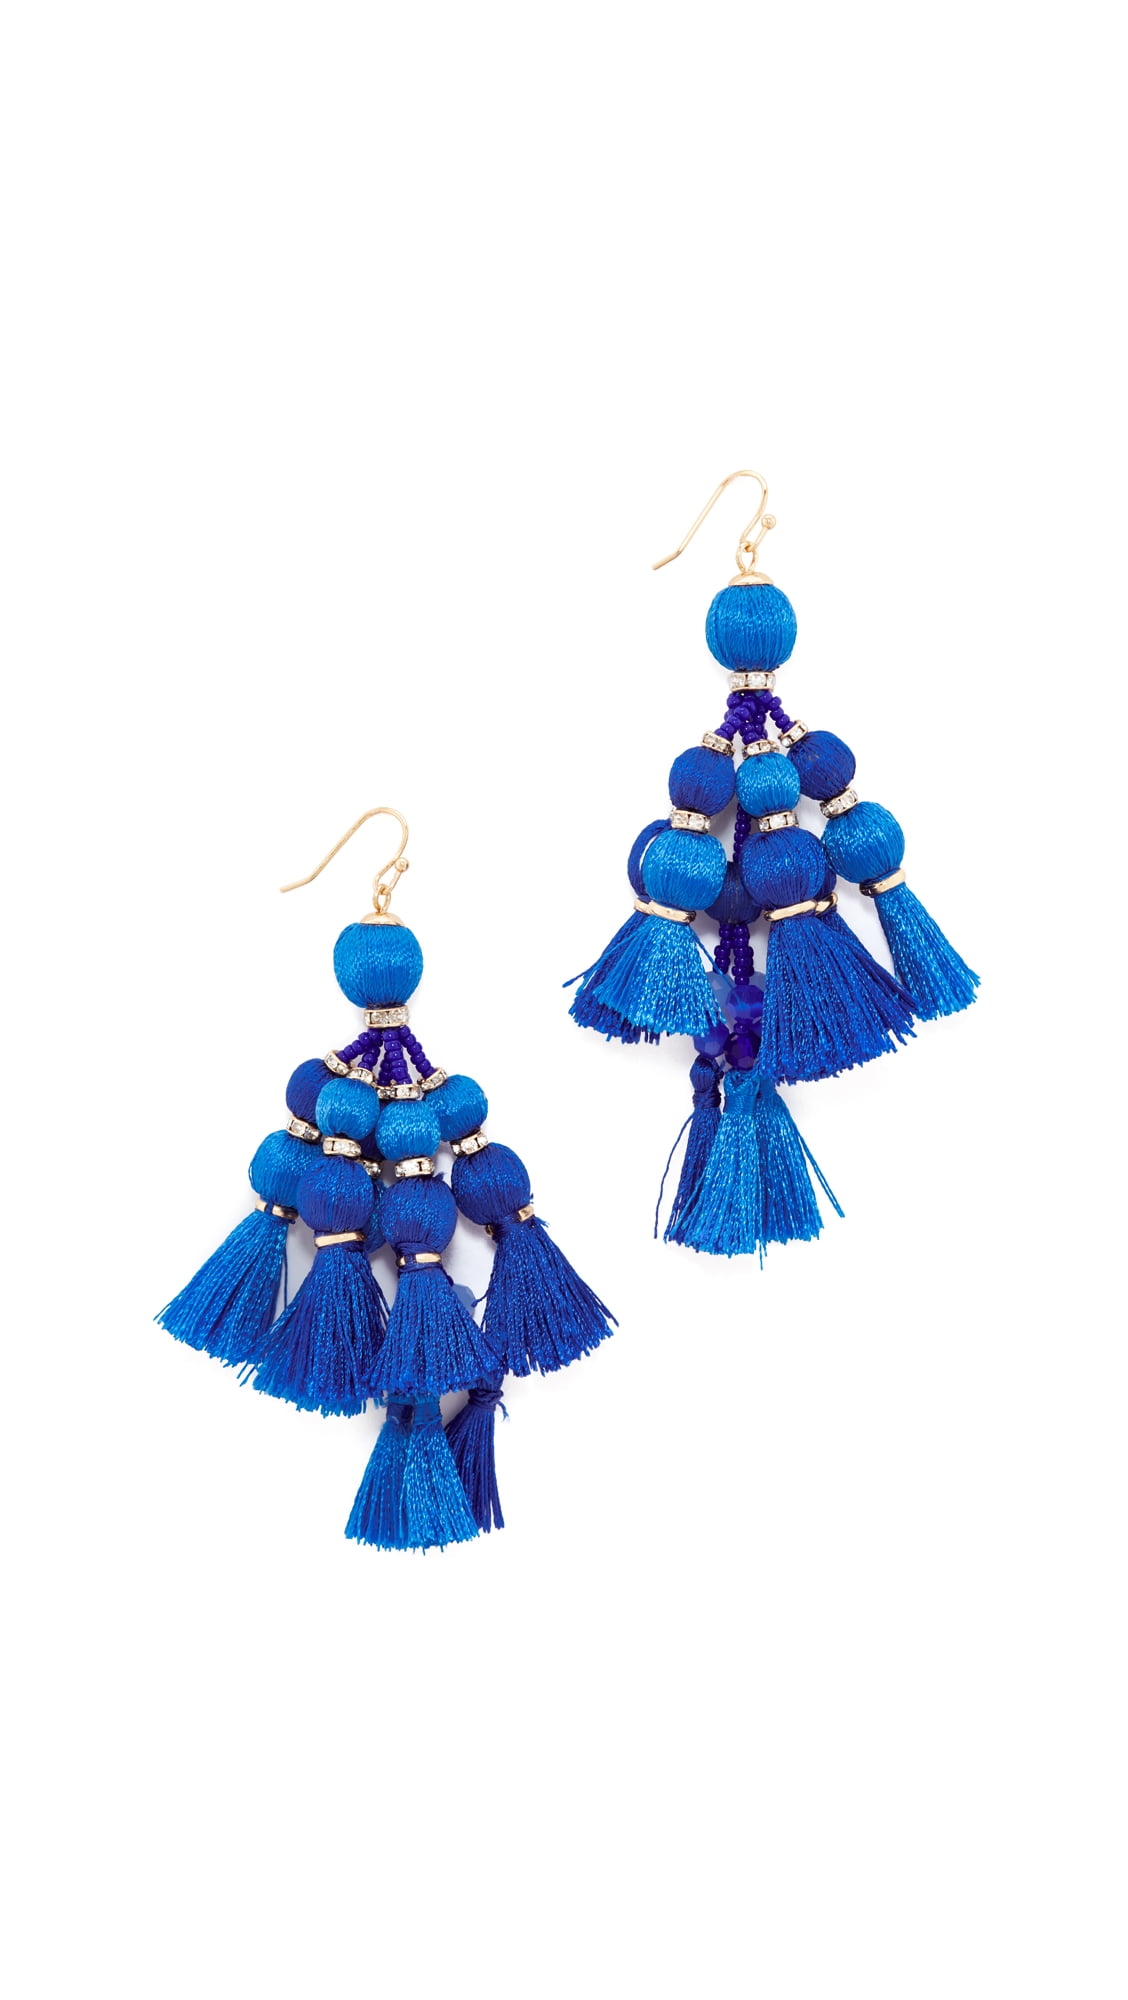 Kate Spade NY Pretty Poms Tassel Pendant Necklace Earrings Set Royal Blue  Kate  Spade jewelry  098686681361  Fash Brands